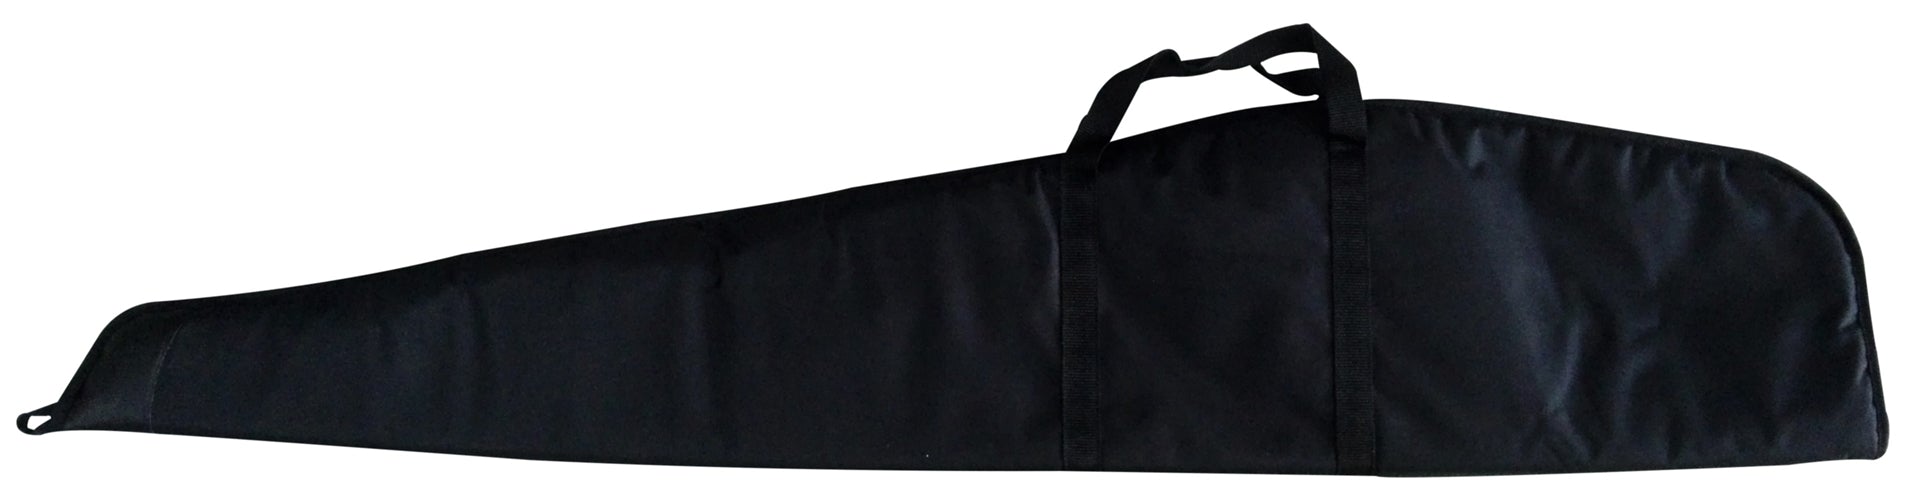 MAVERICK STANDARD RIFLE BAG 44" BLACK - NeonSales South Africa